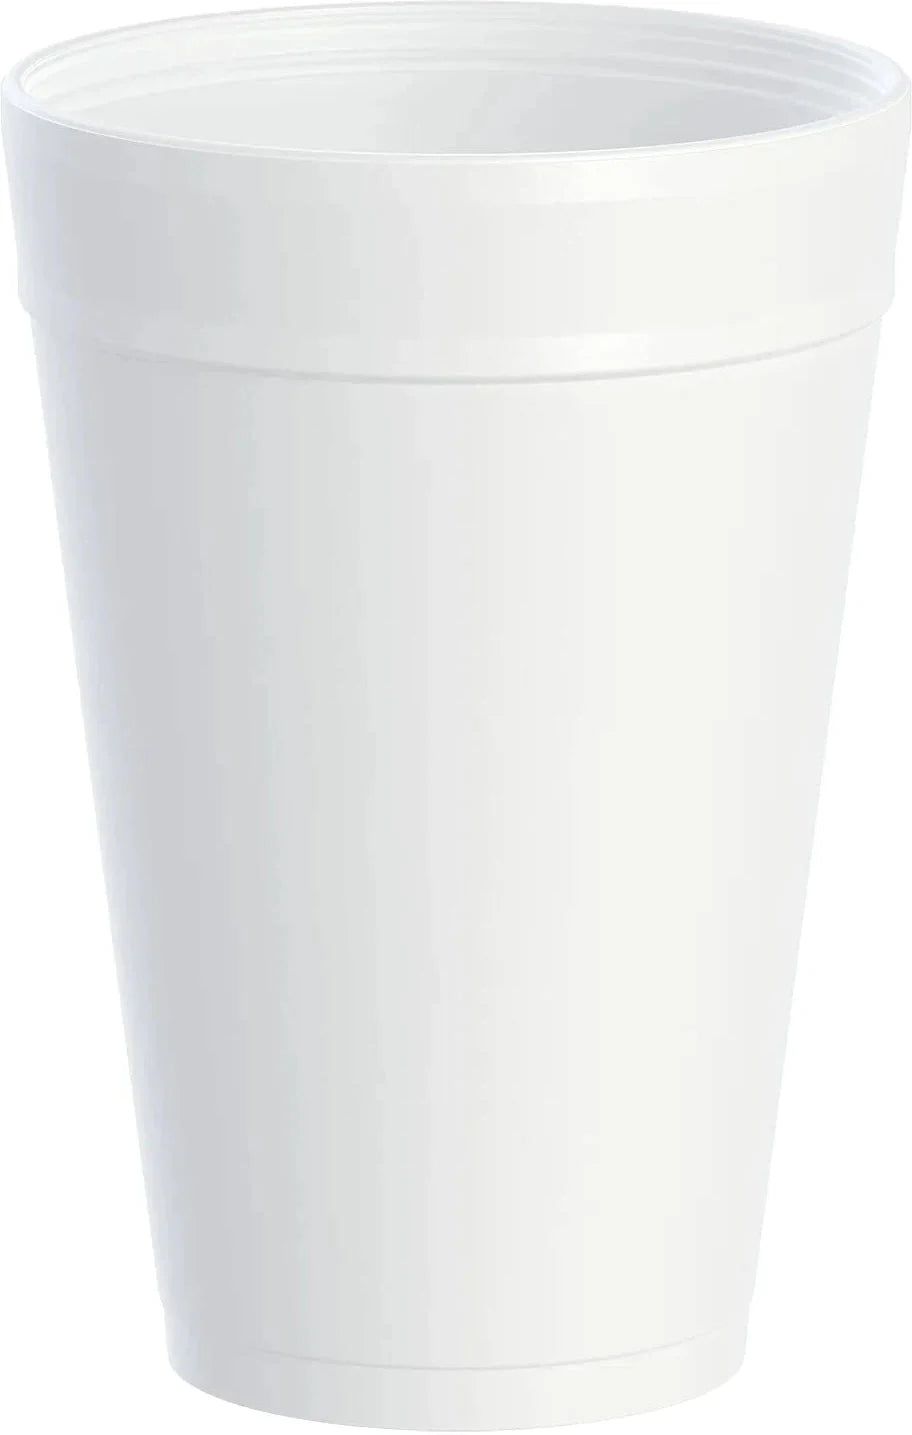 Dart Container - 32 Oz EPS Foam White Cup, 500/Cs - 32TJ32